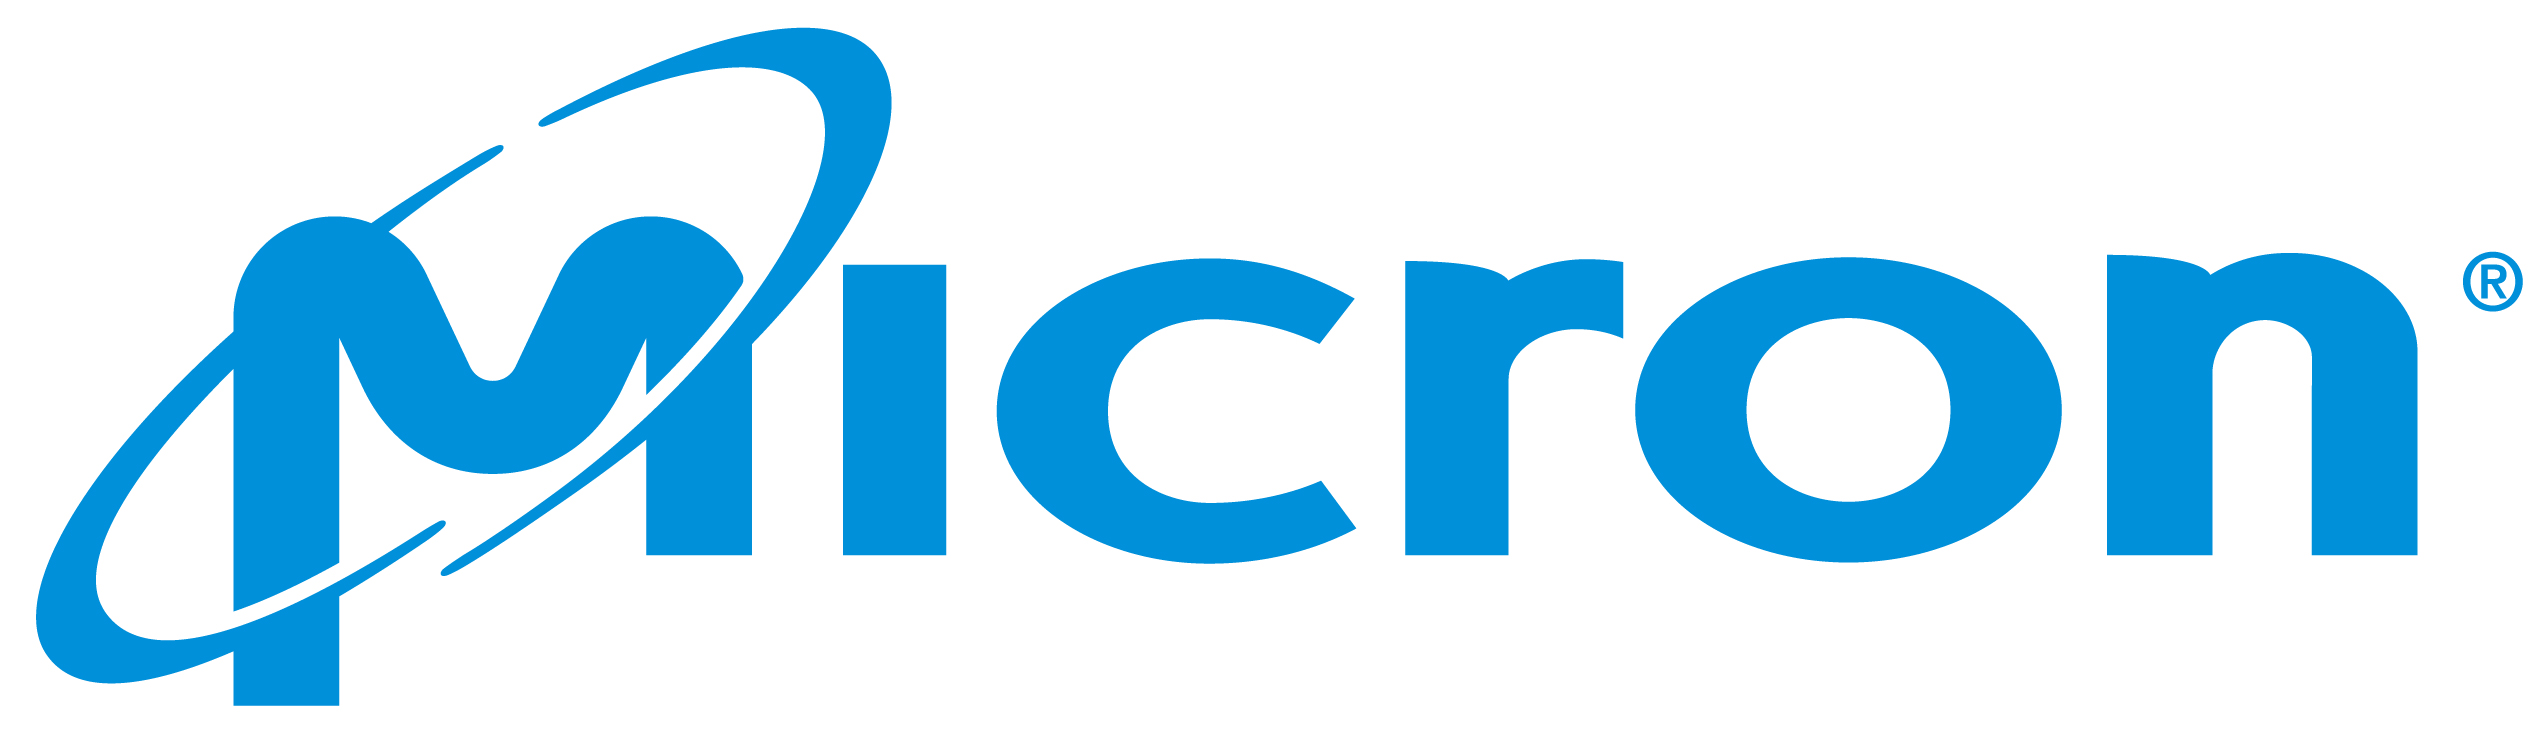 micron logo 01